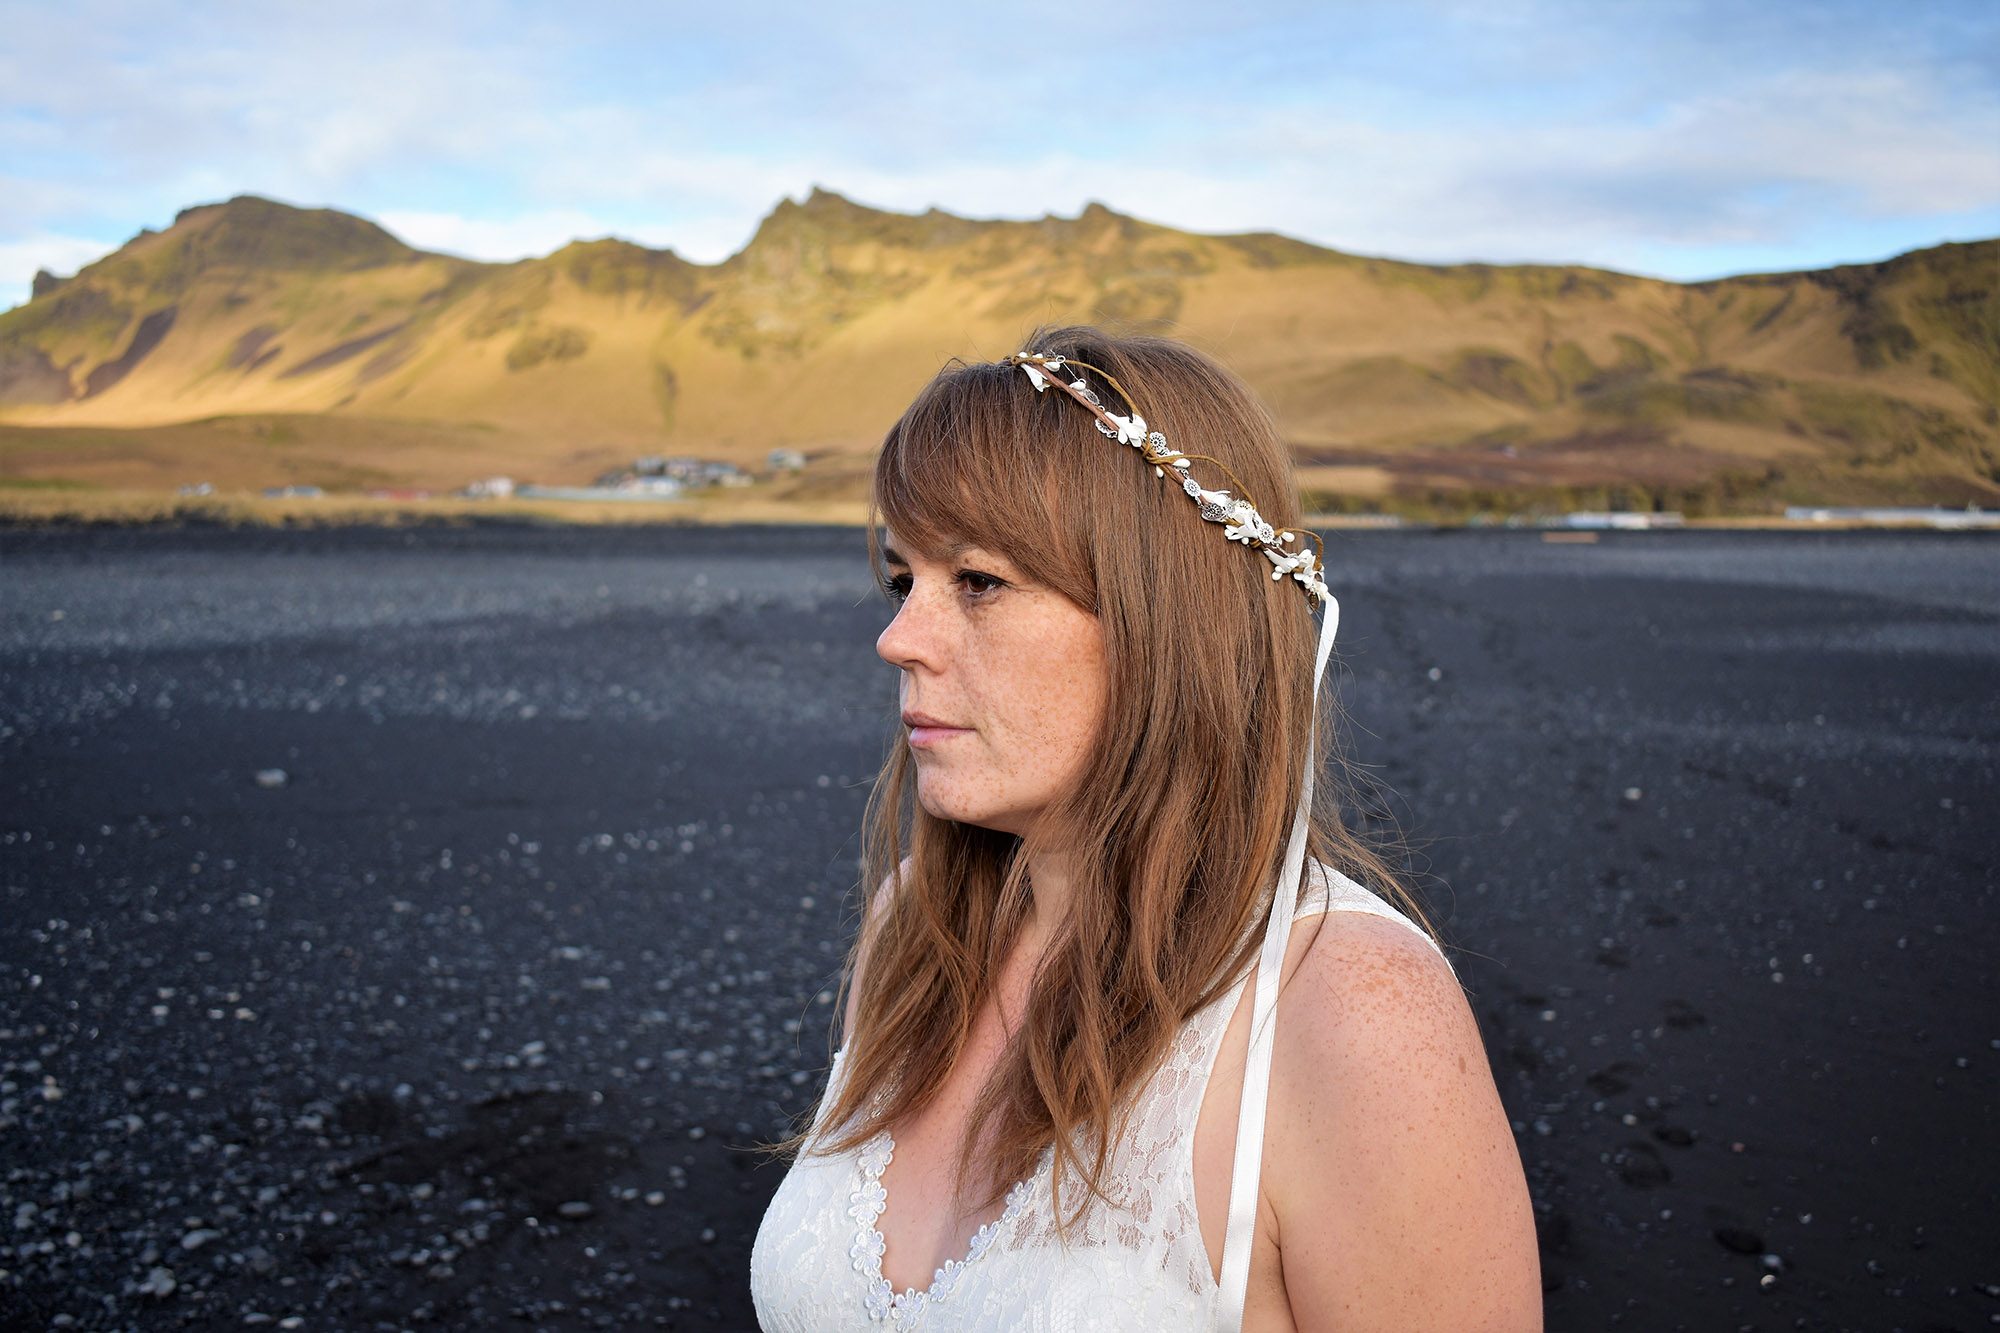 Mariage en Islande - Elopement | Voyages-et-compagnie.com - Blog voyage